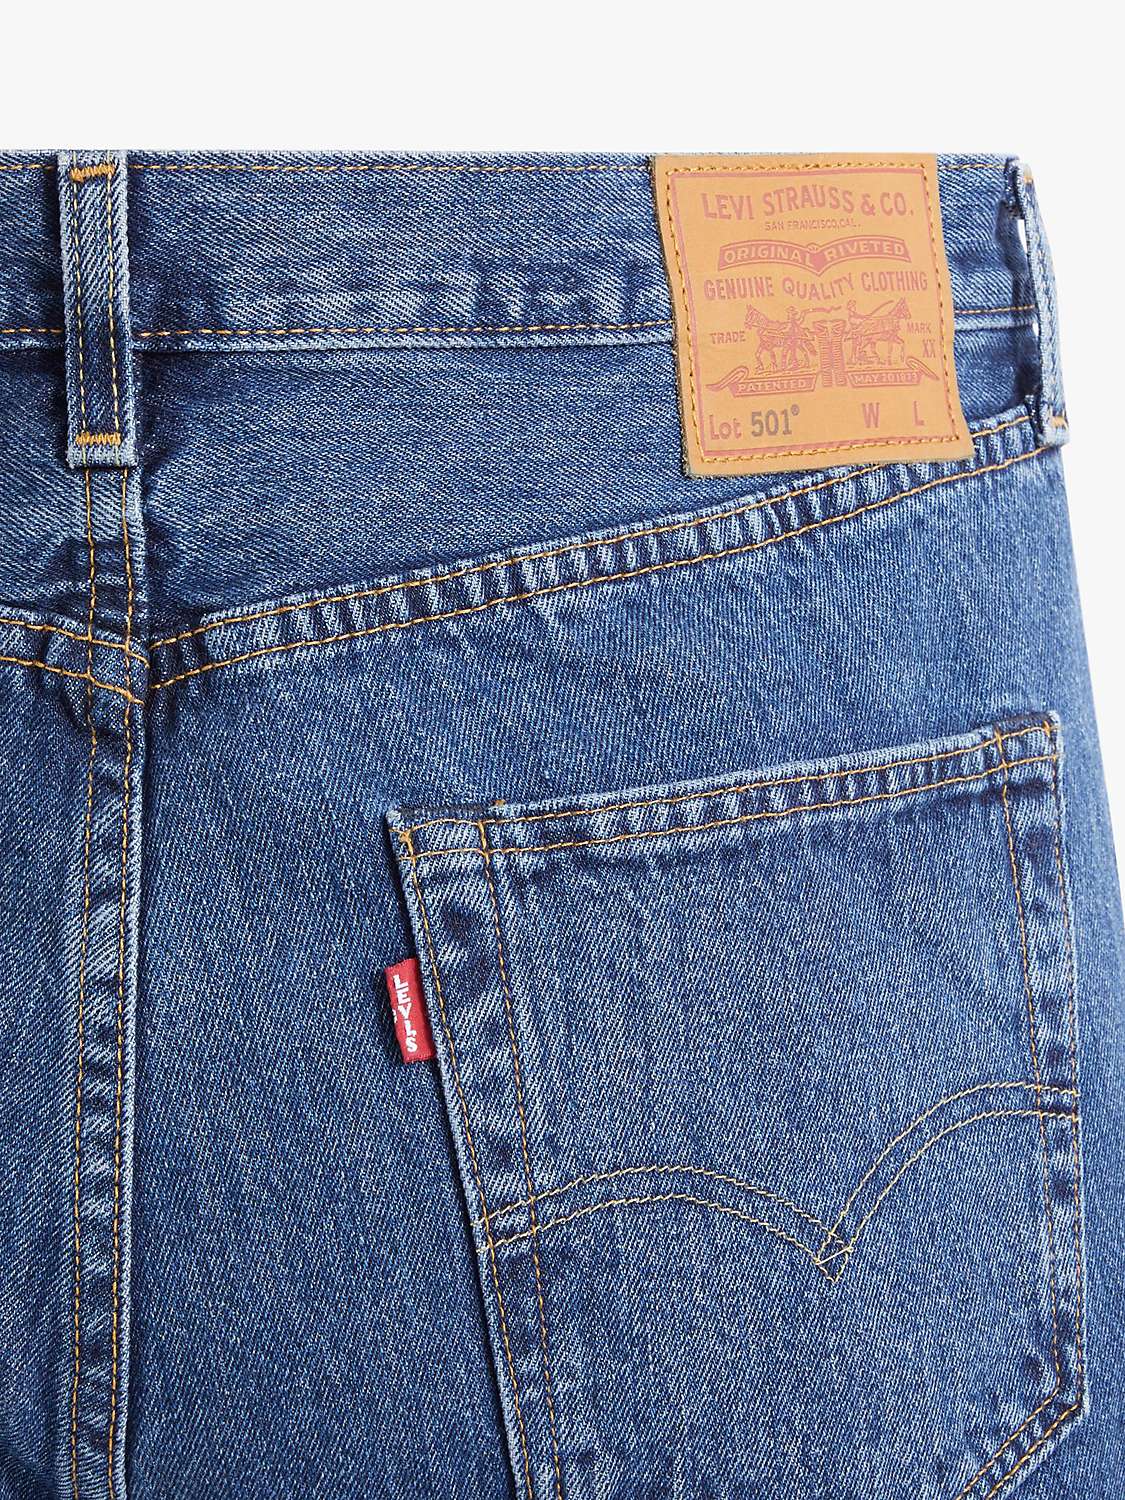 Buy Levi's Big & Tall 501 Original Straight Jeans, Stonewash Online at johnlewis.com